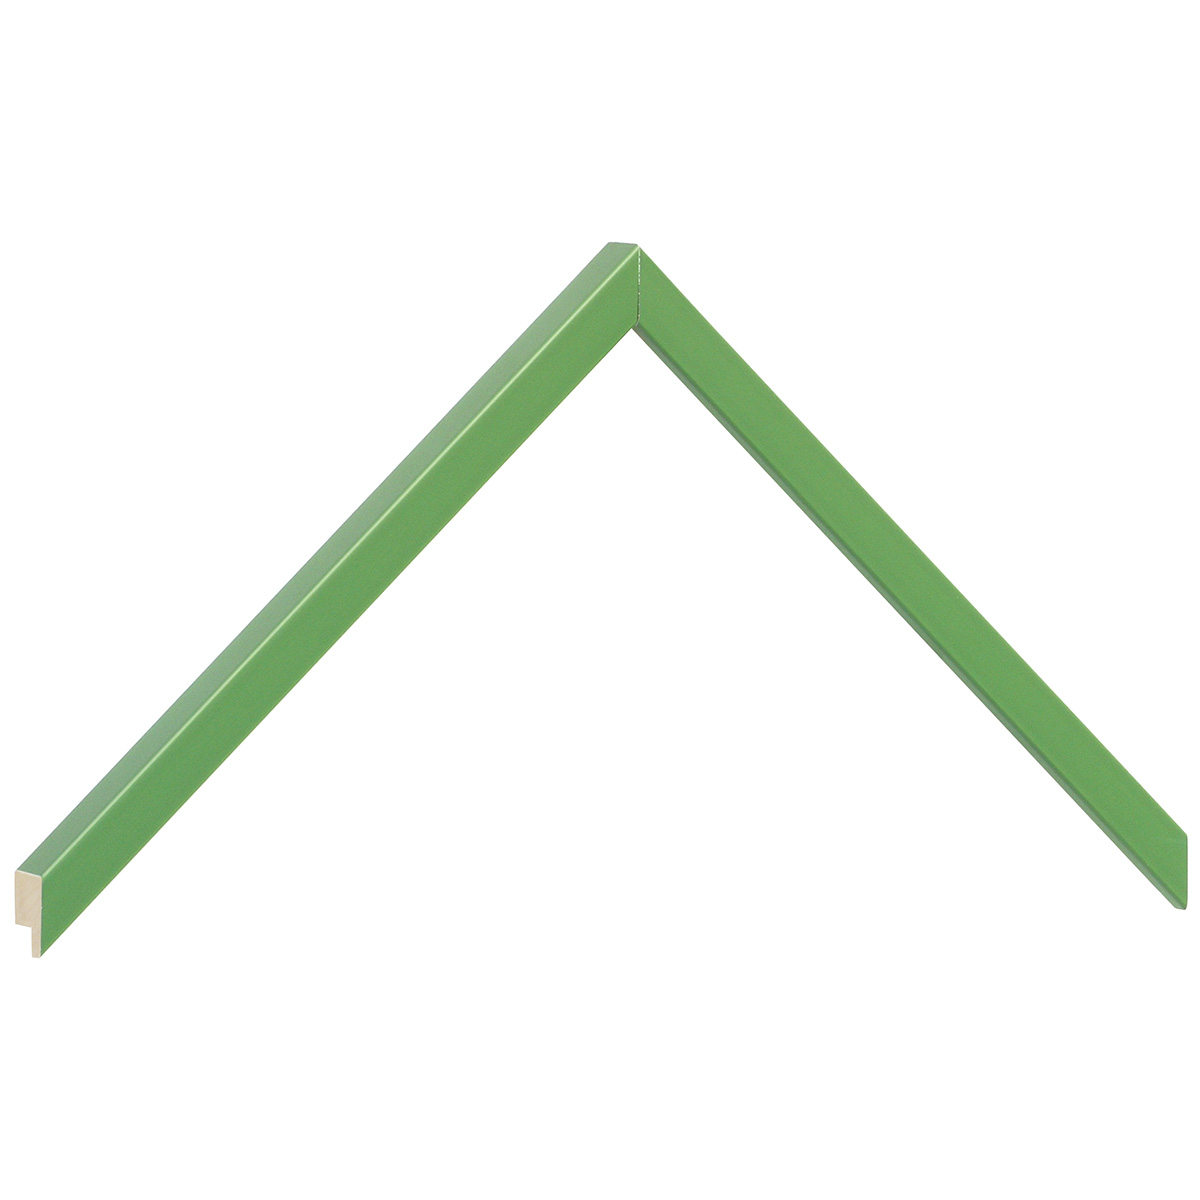 Profil ramin plat 10 mm - finisaj mat - culoare verde - Mostră